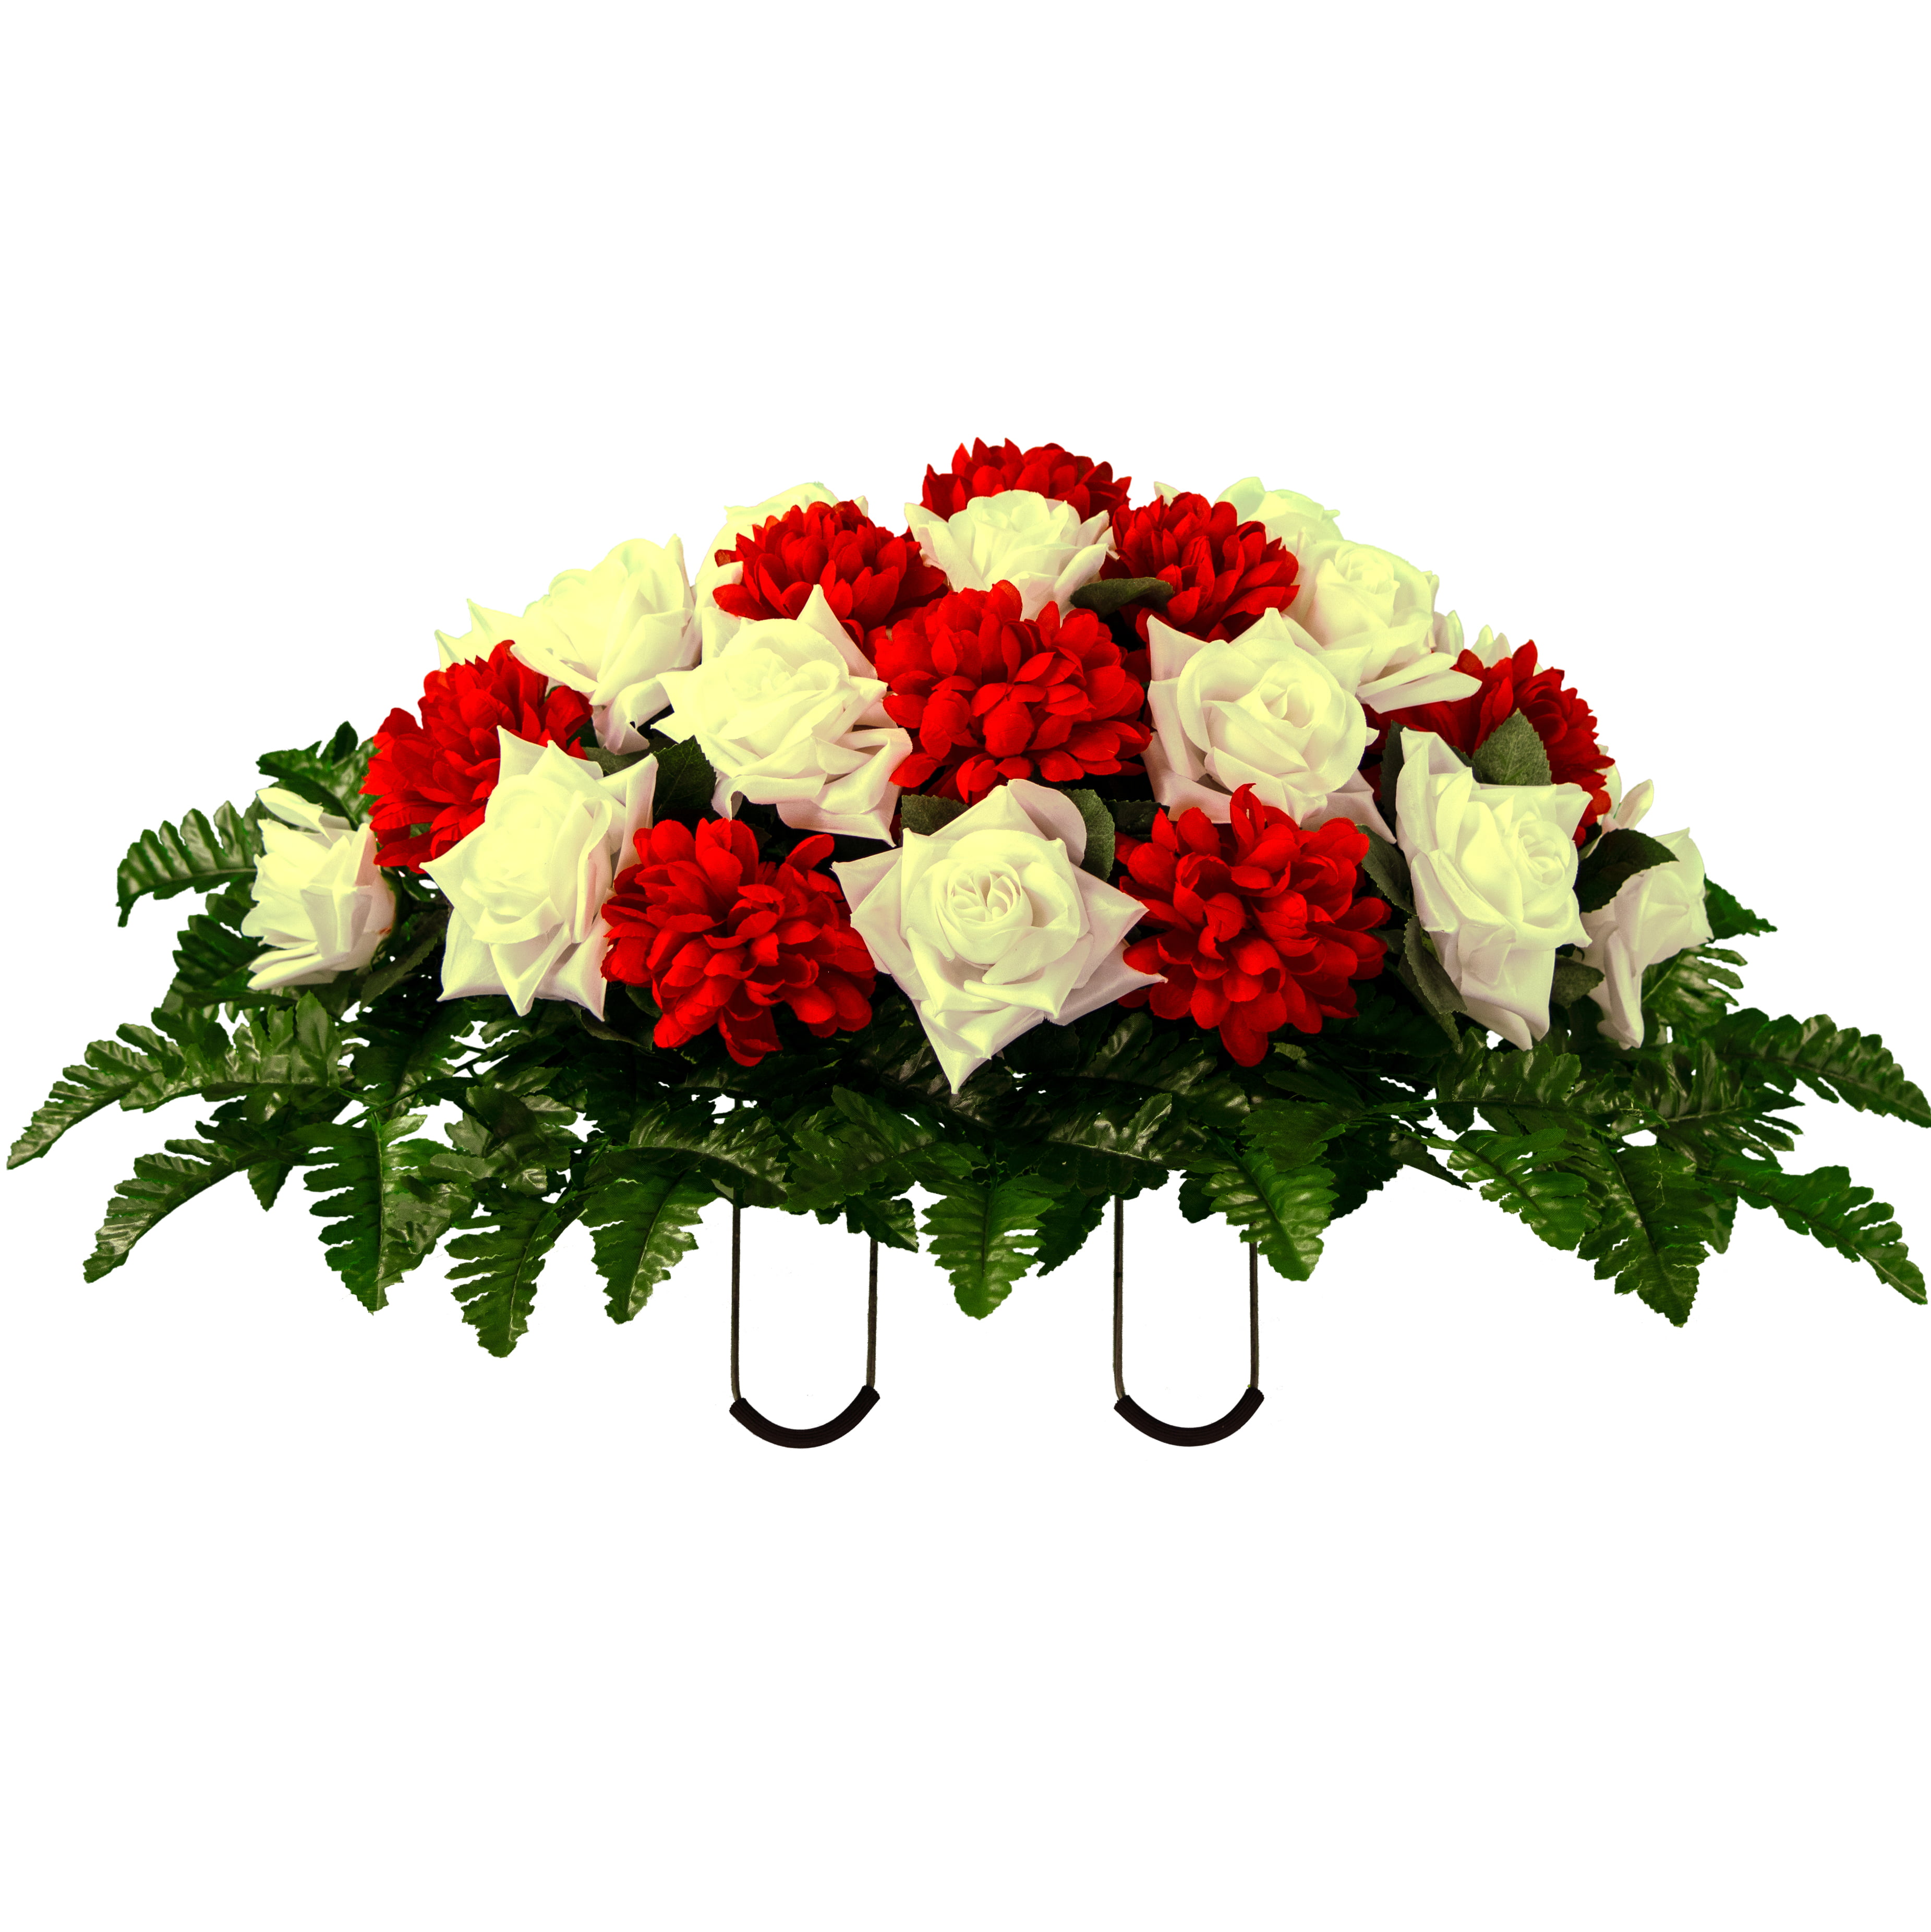 New Stunning Artificial Flower Arrangement Red/cream In Black Pot For Grave 